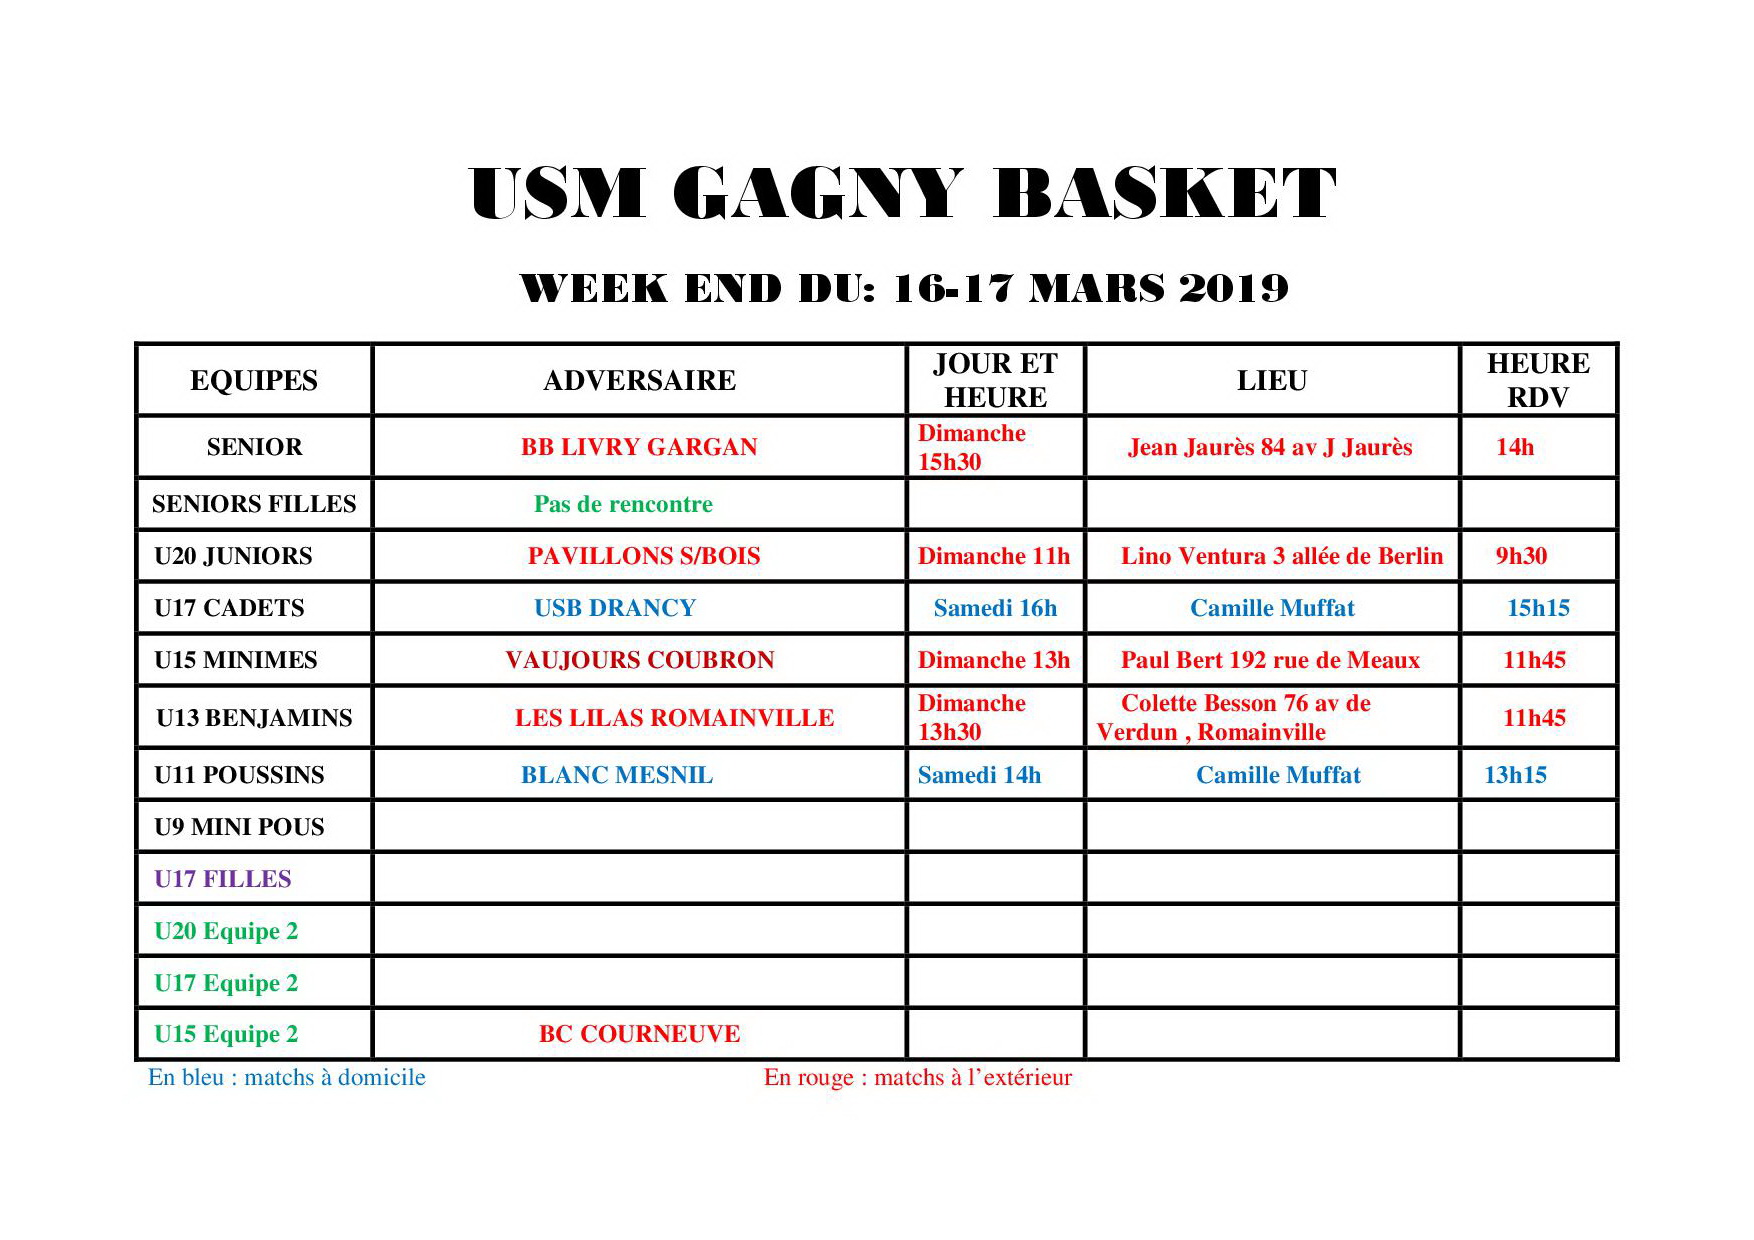 Usmg gagny planning week end 16 17 mars 2019